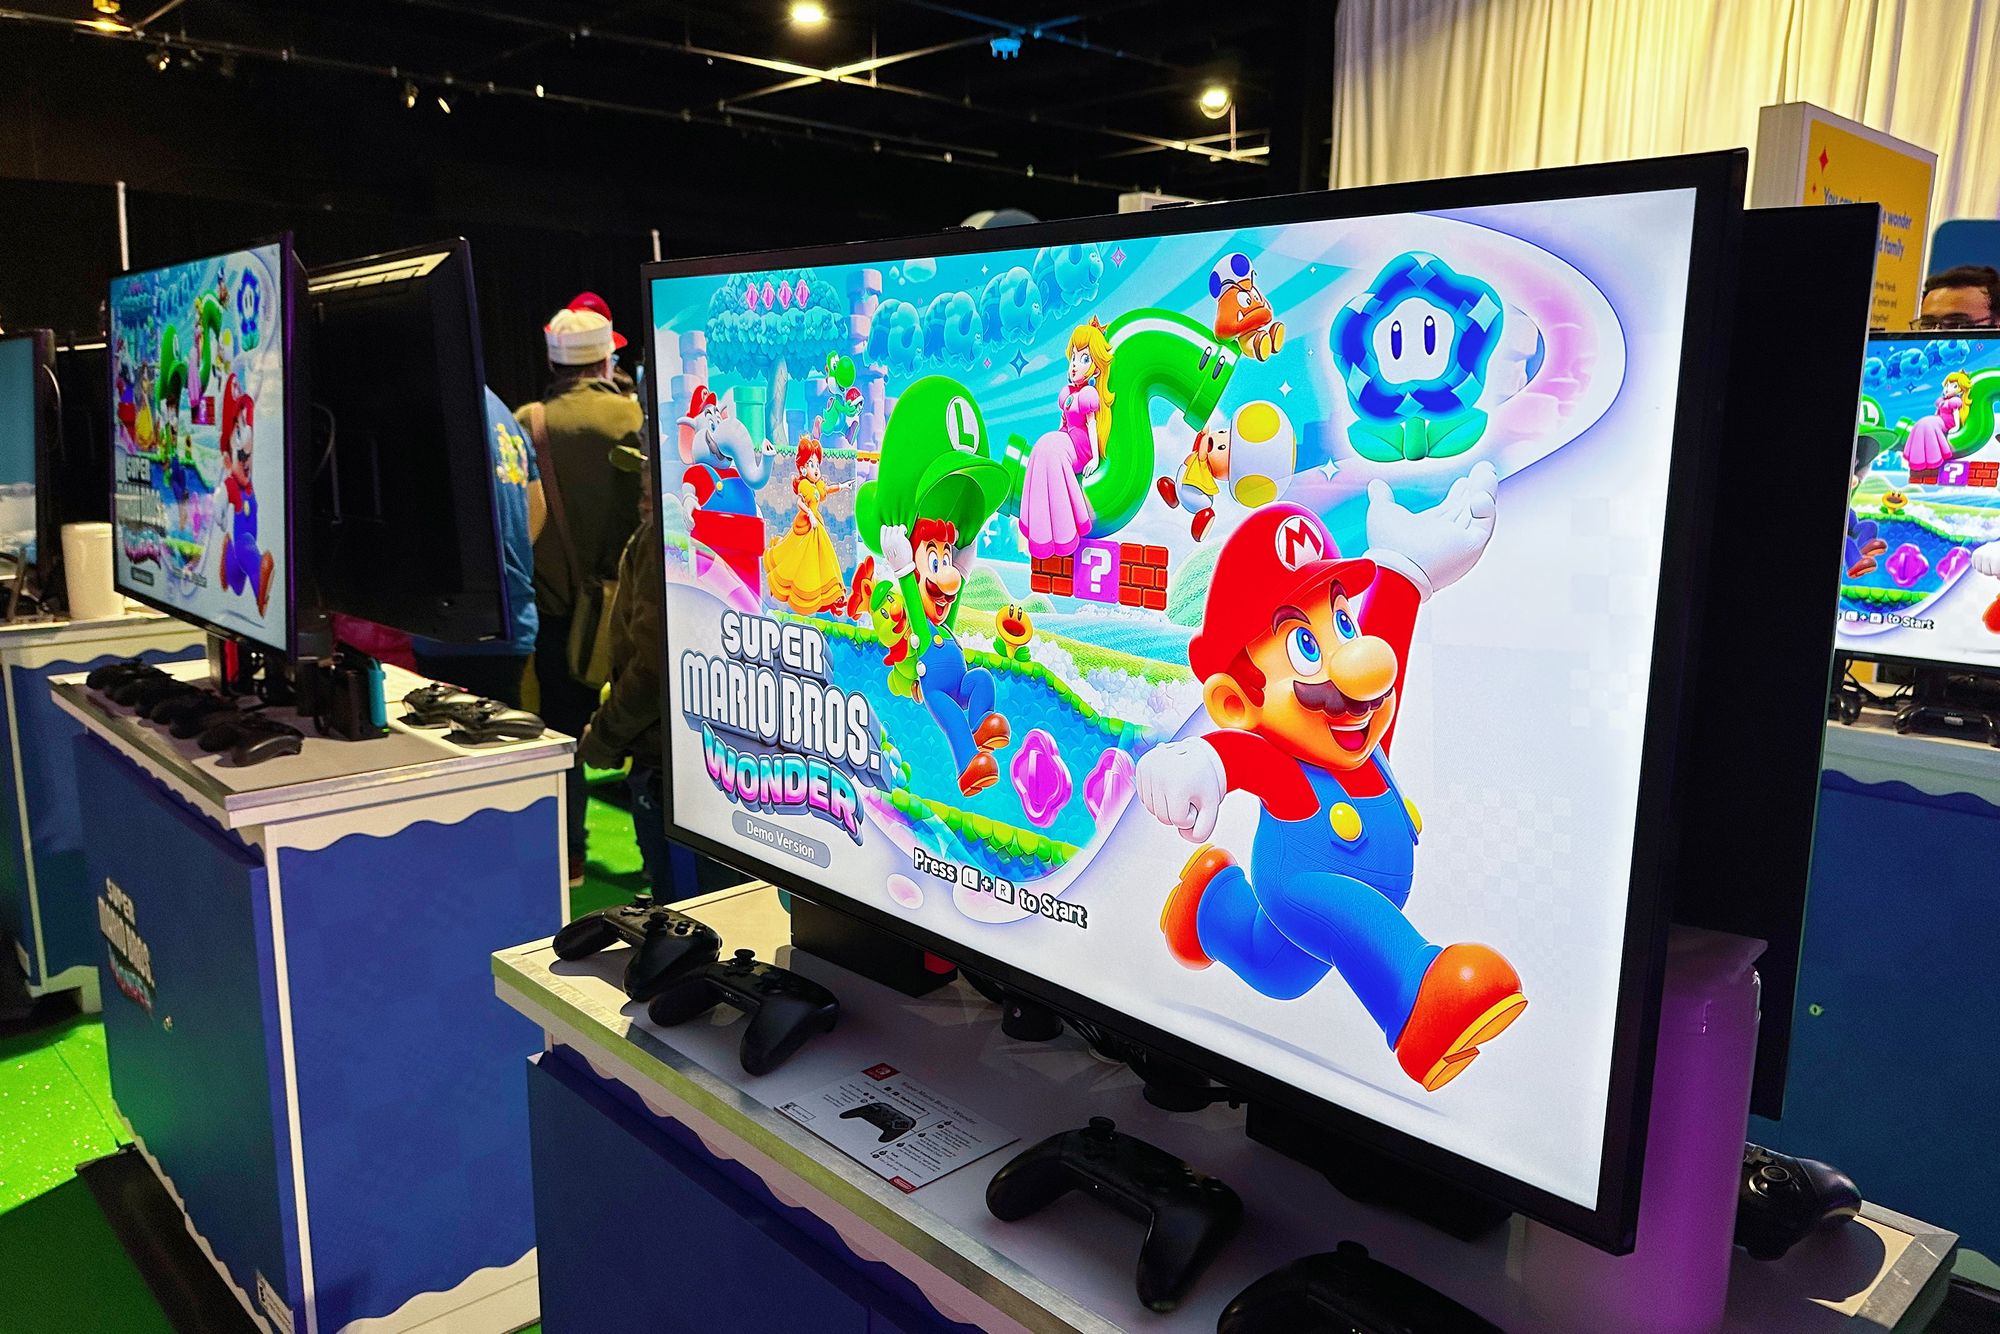 Nintendo Canada's Super Mario Bros Wonder Launch Event: A 1-Up Adventure!